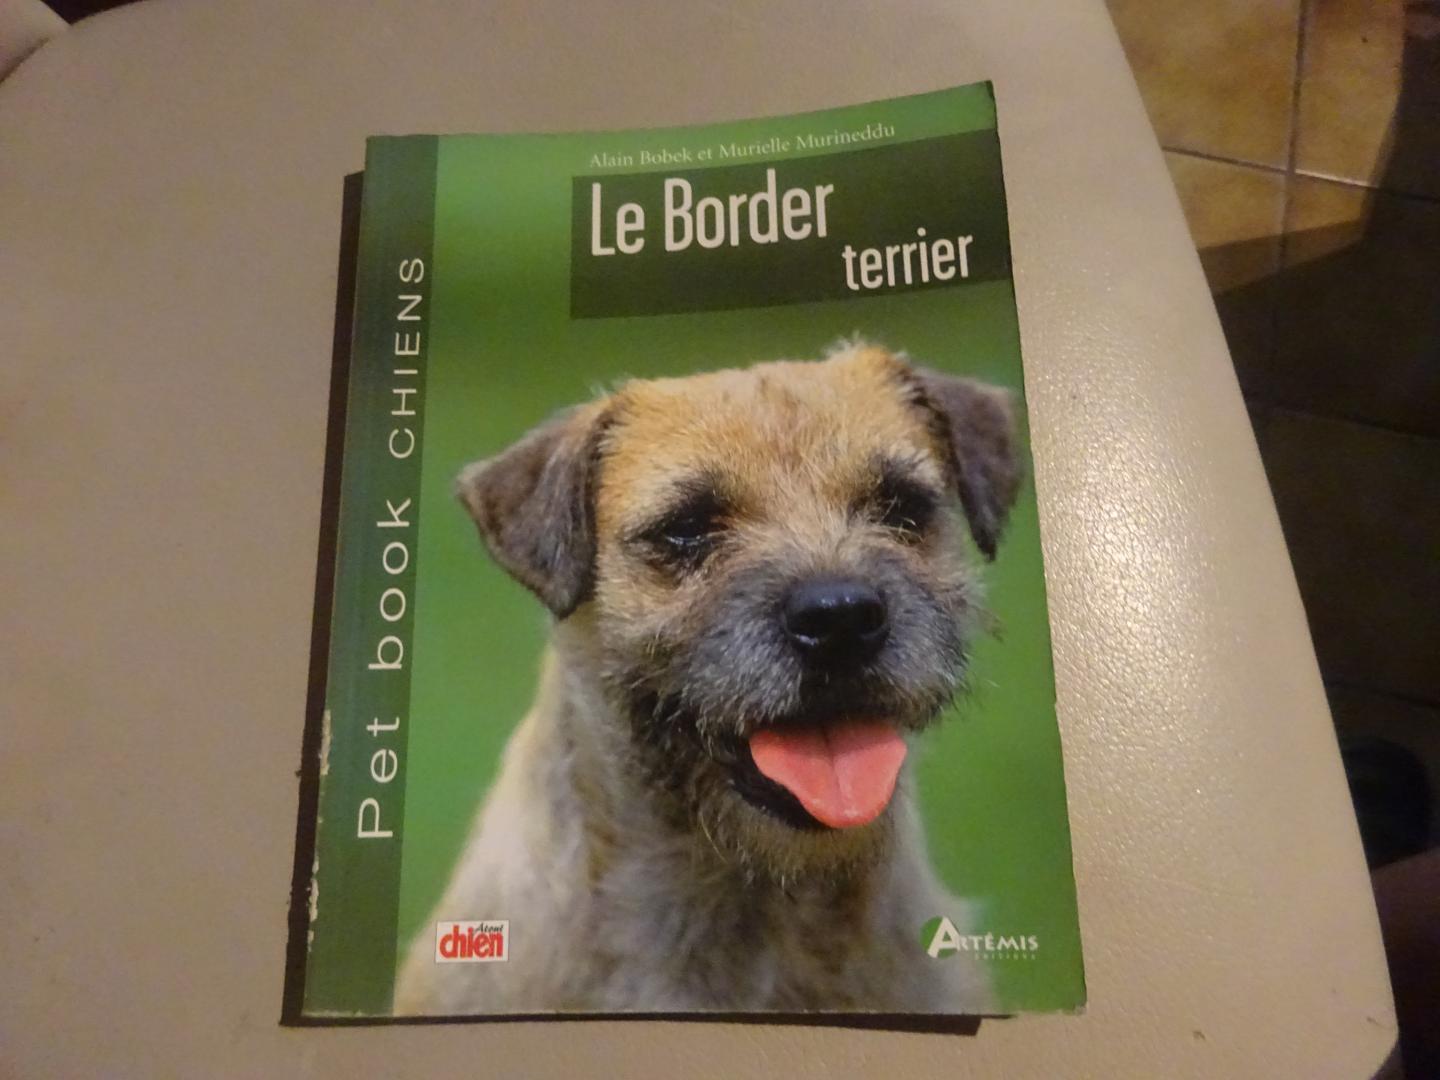 Bobek, Alain & Murineddu, Murielle - Le Border terrier